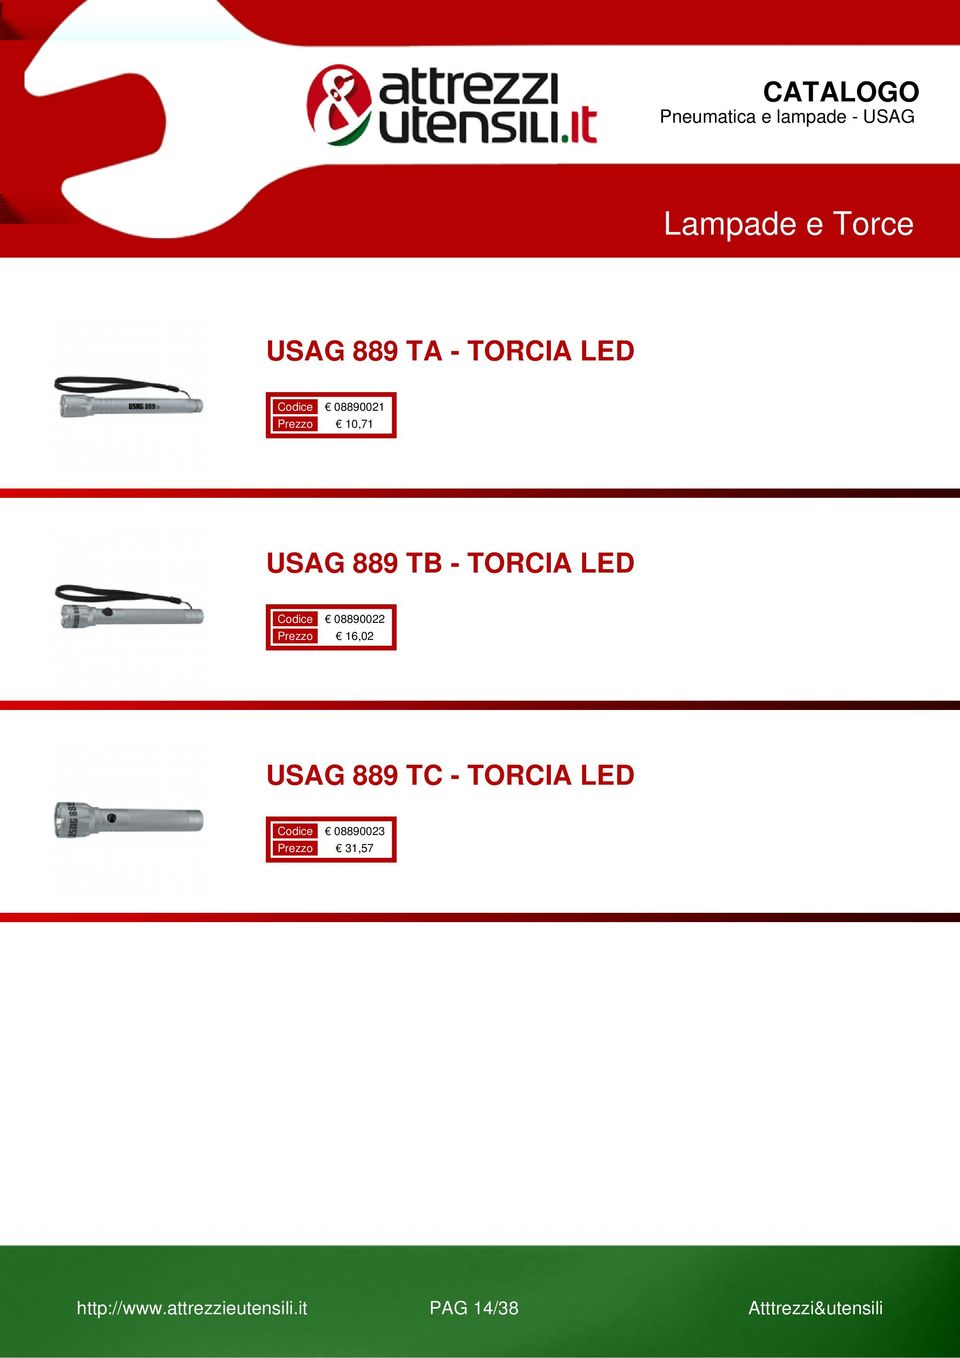 Prezzo 16,02 USAG 889 TC - TORCIA LED Codice 08890023